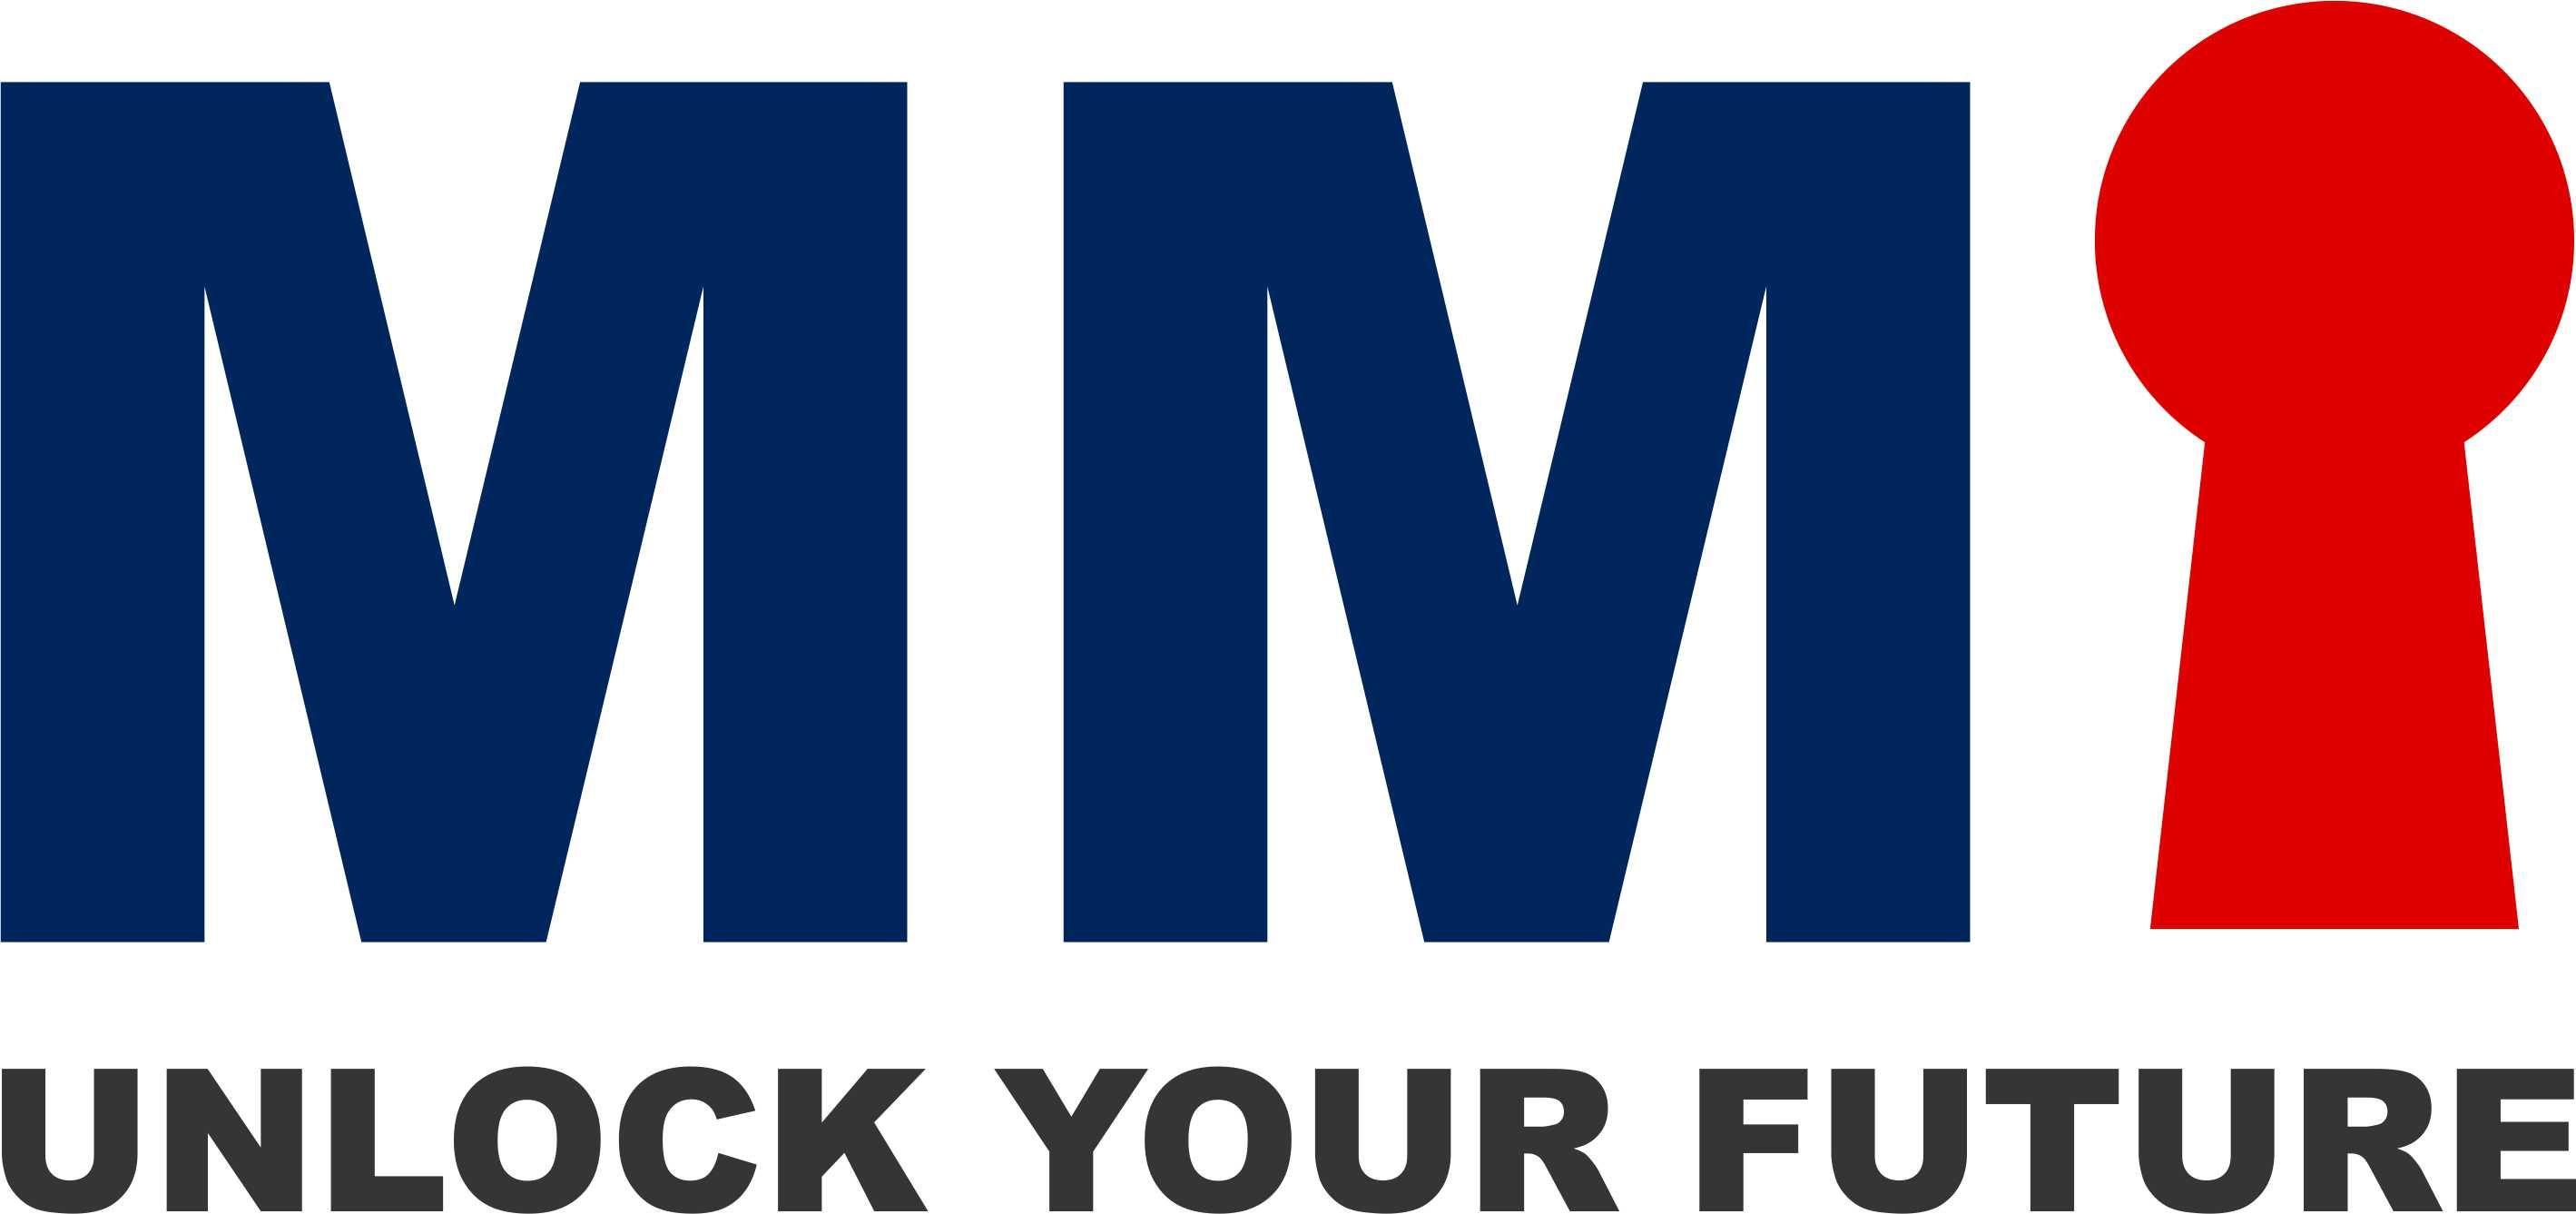 MMI Logo - File:MMI LOGO.jpg - Wikimedia Commons